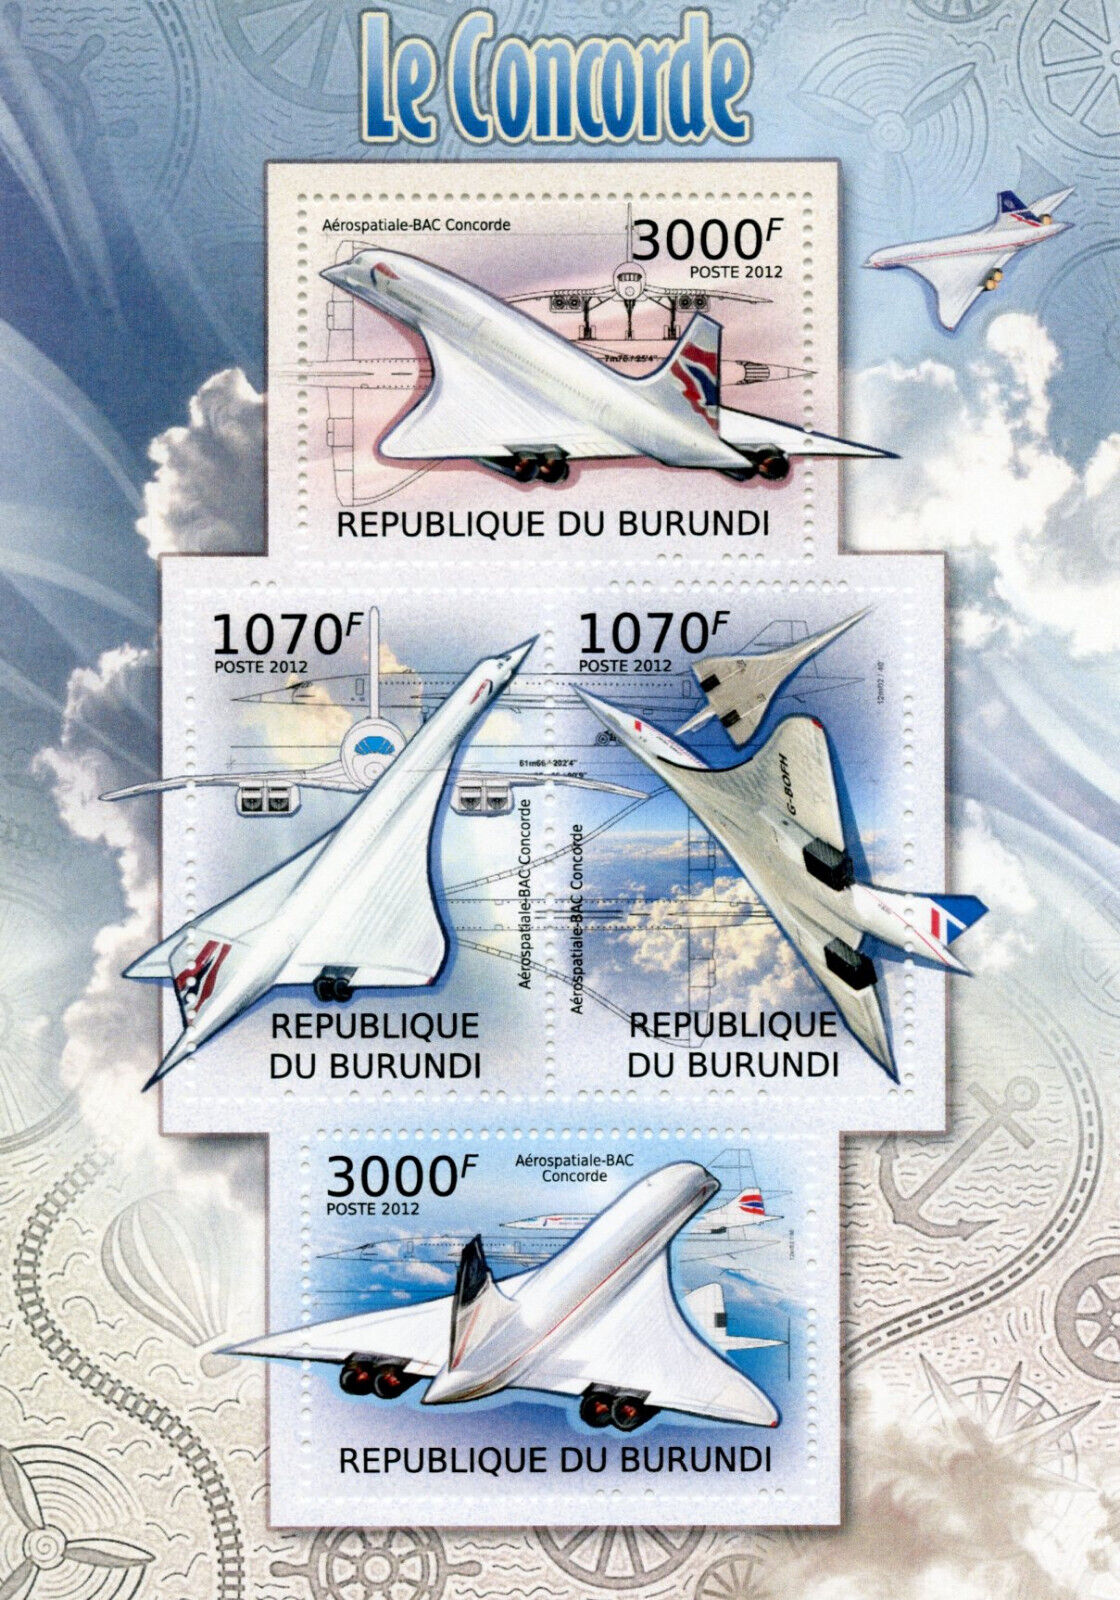 Burundi 2012 MNH Aviation Stamps Concorde Aircraft Aerospatiale-BAC 4v M/S